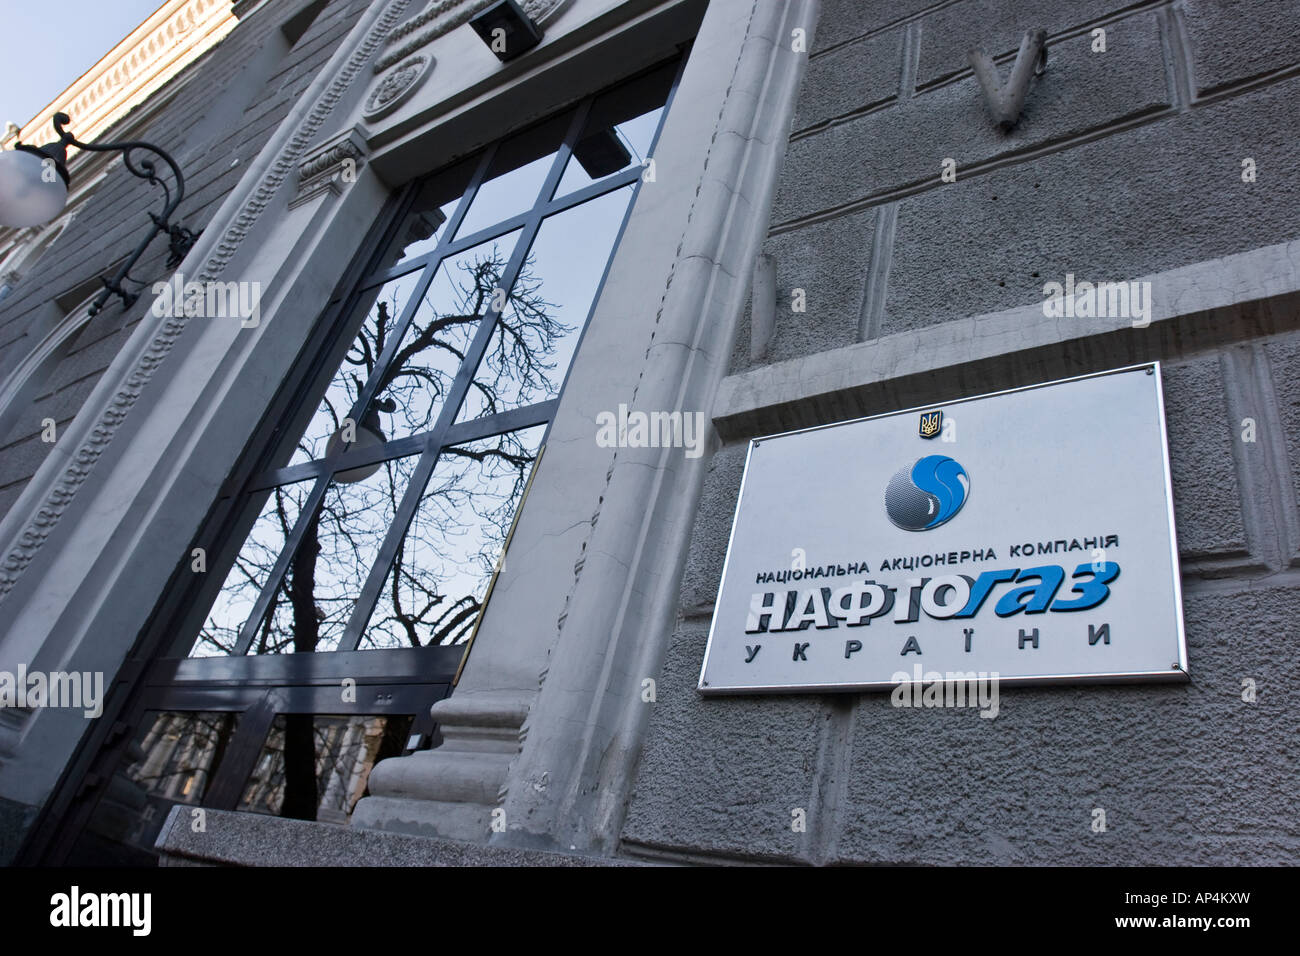 Ucraina, Kiev: l'ufficio centrale della Nafrogaz Ukrainy national oil and gas joint stock company Foto Stock